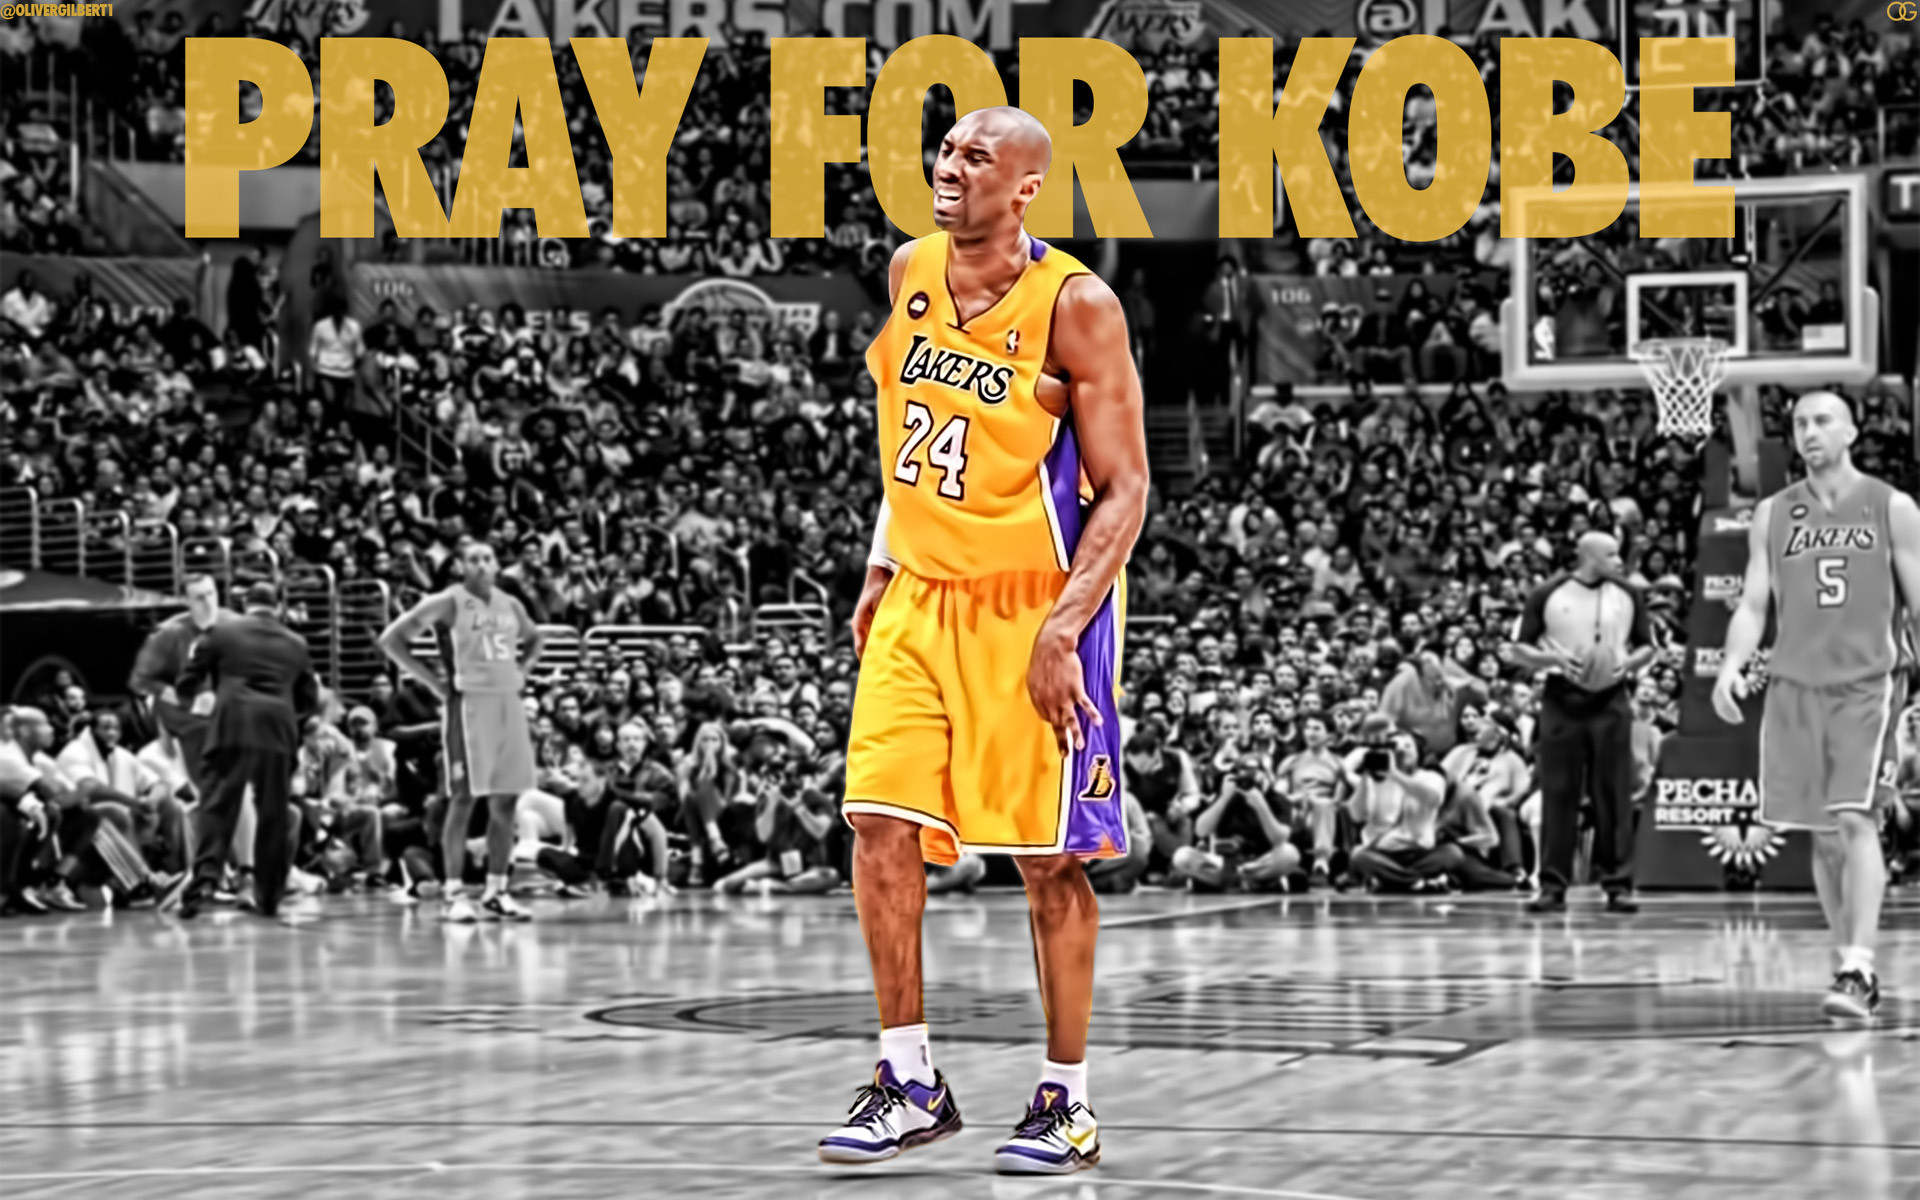 Kobe Bryant Pray For Kobe 1920Ã1200 Wallpaper